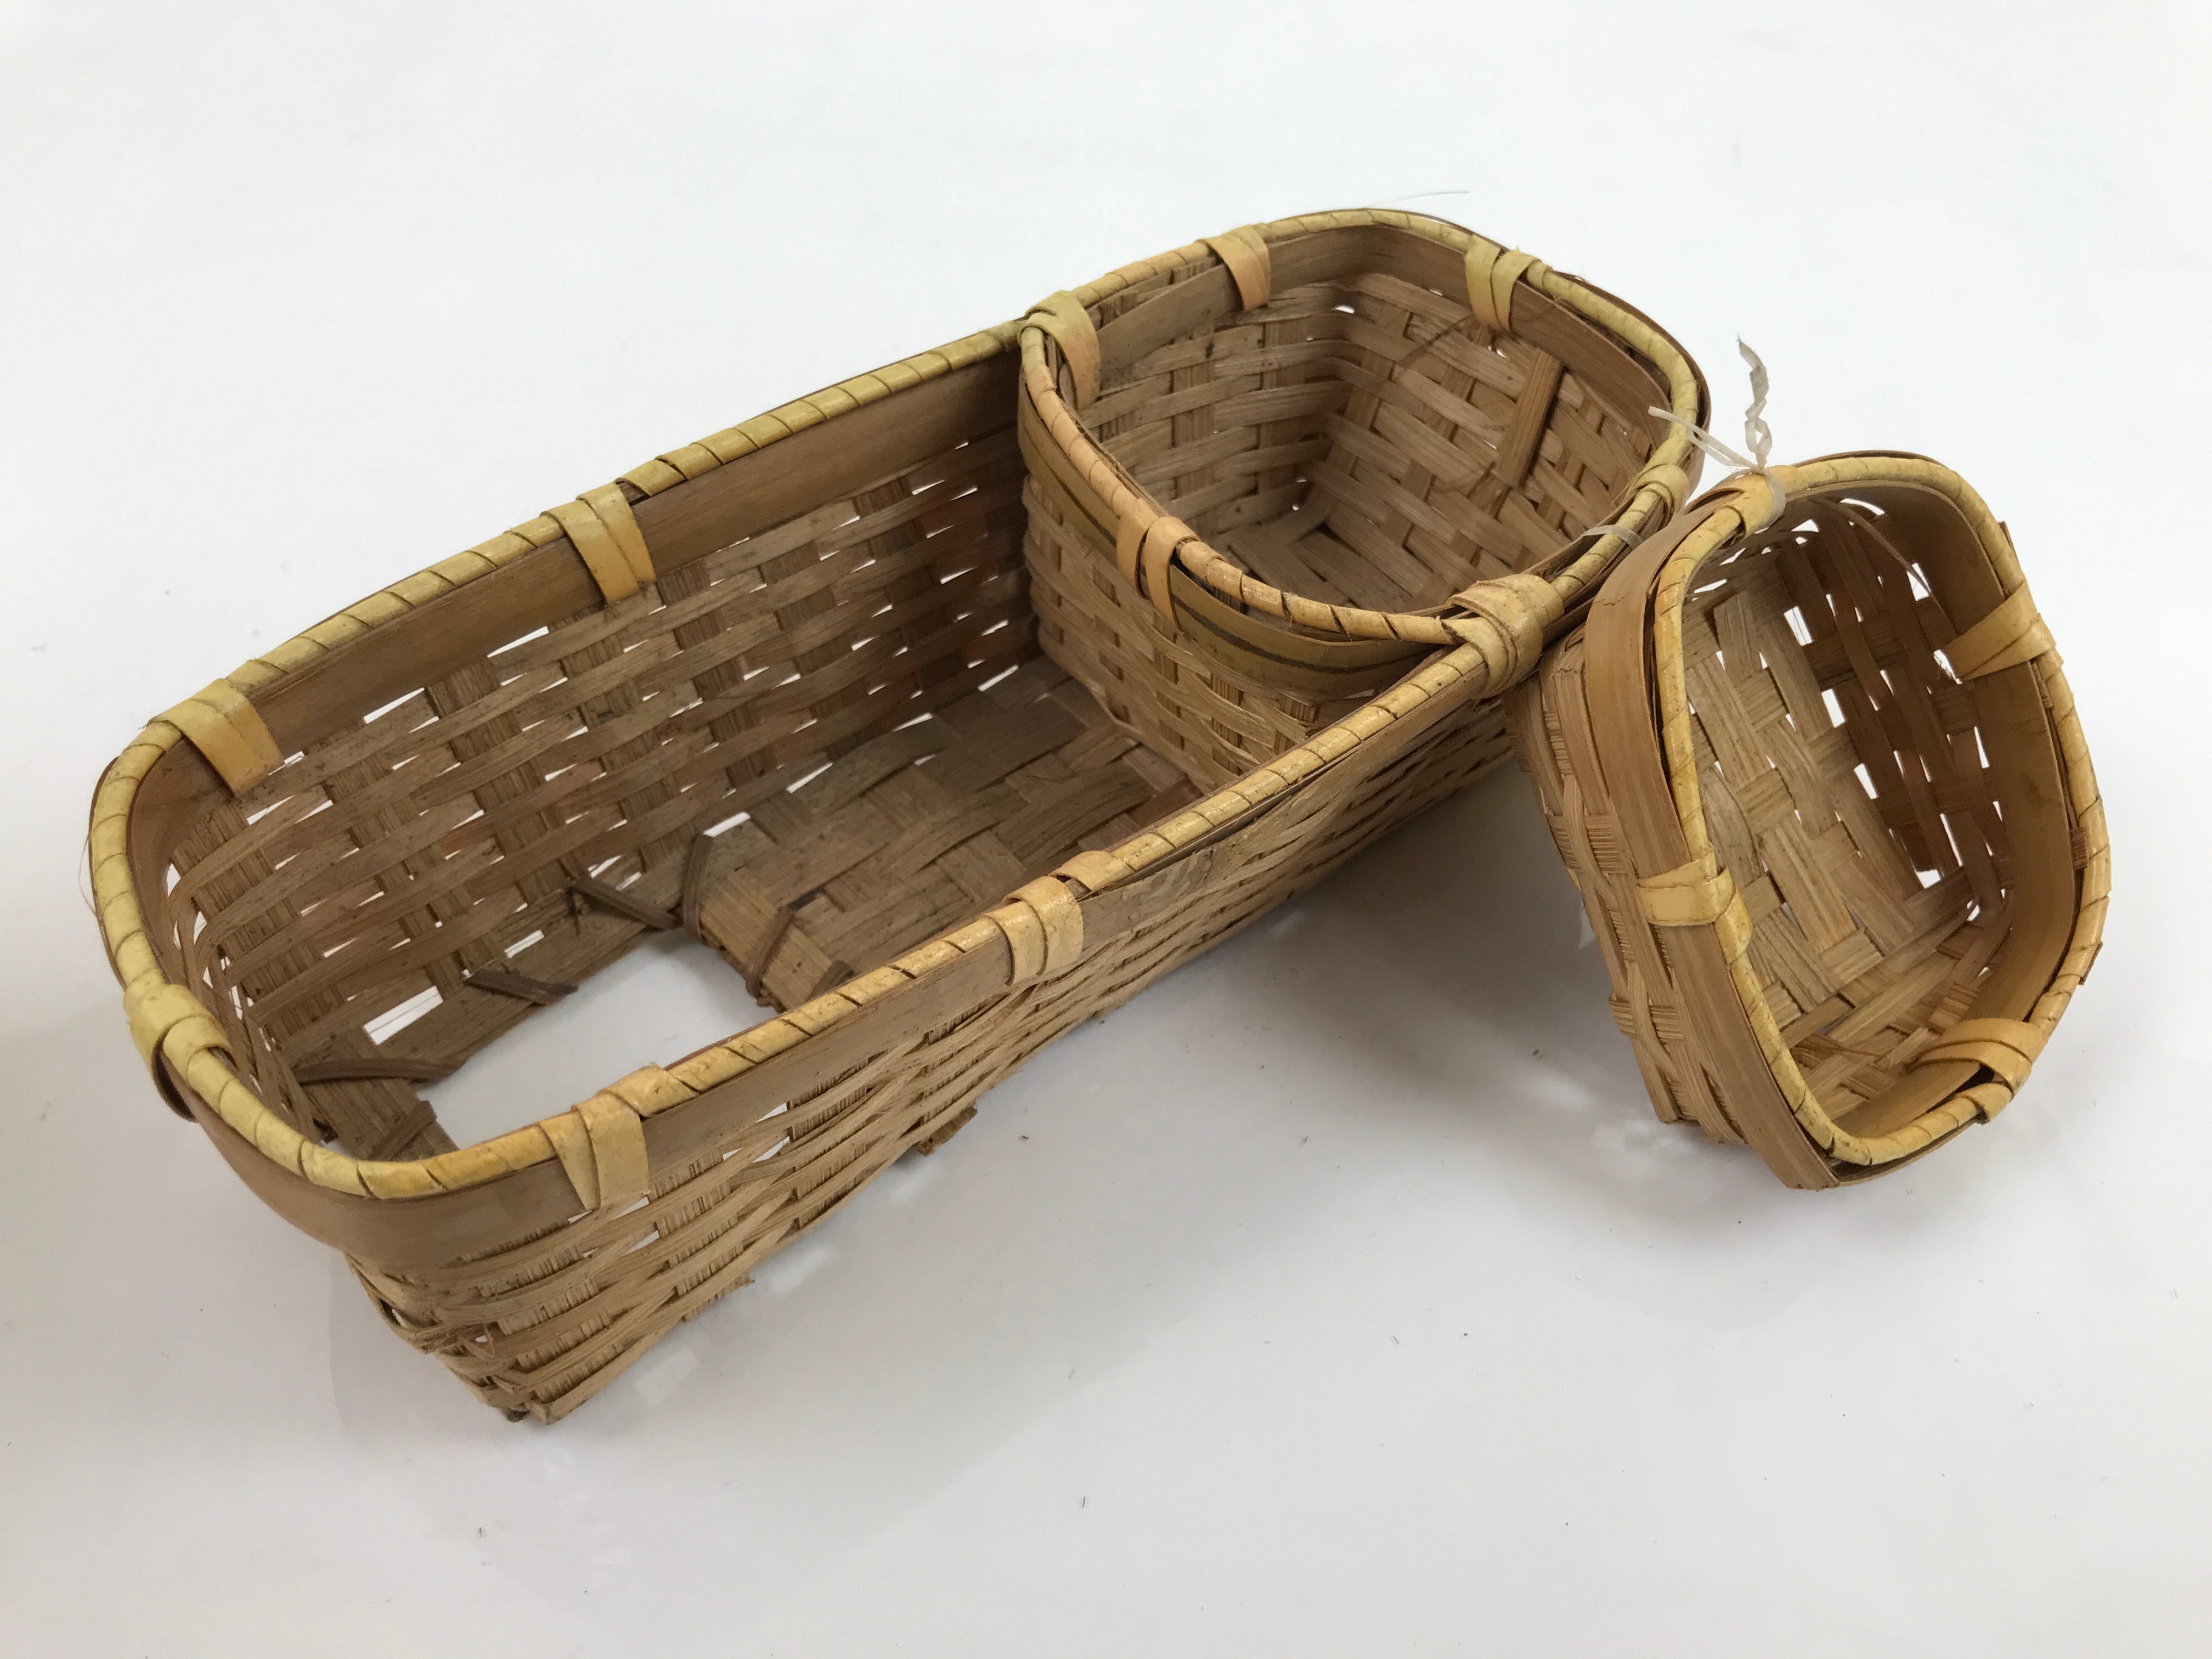 Japanese Handwoven Wooden Fishing Basket Vtg Kago Tsurikago Brown Lid B239